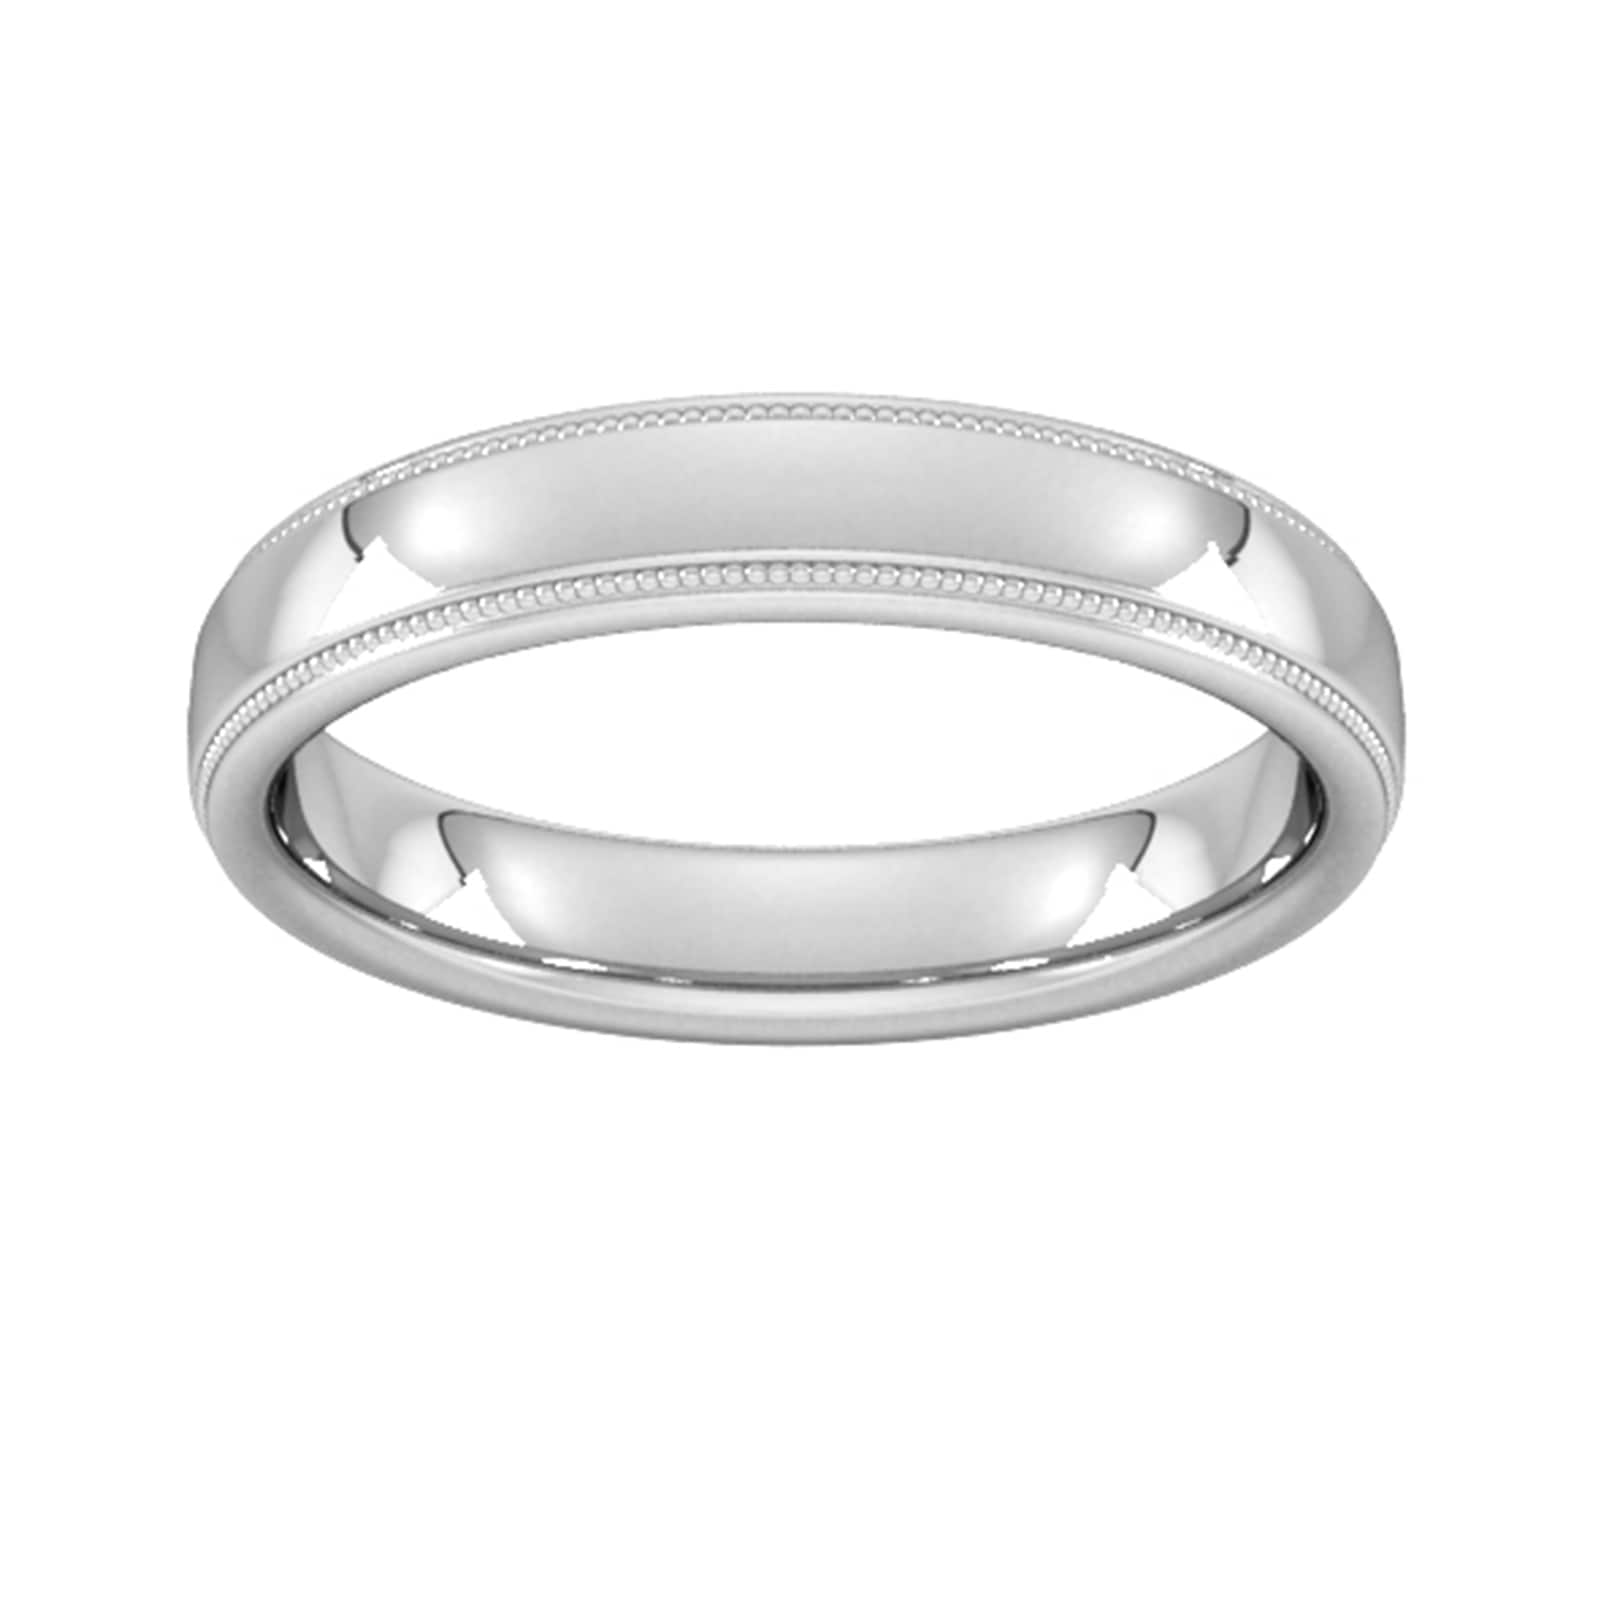 4mm Flat Court Heavy Milgrain Edge Wedding Ring In 9 Carat White Gold - Ring Size O